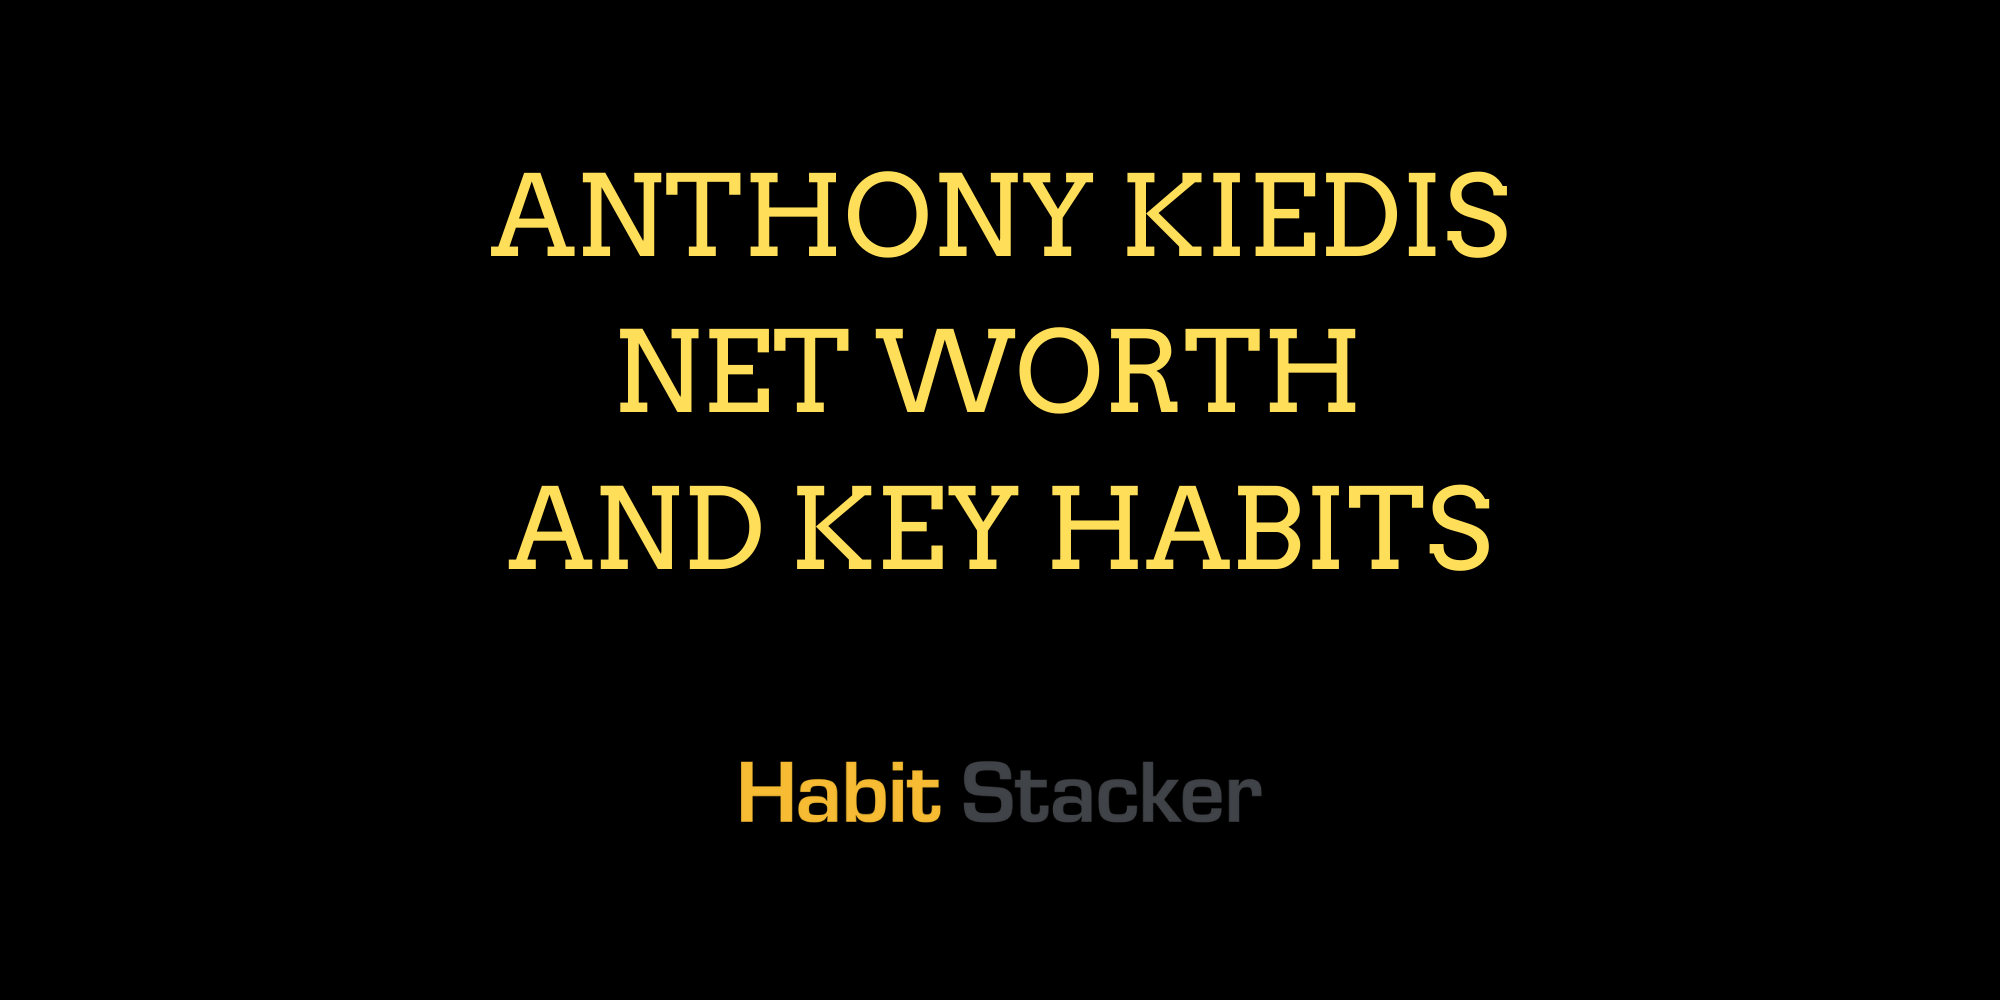 Anthony Kiedis Net Worth